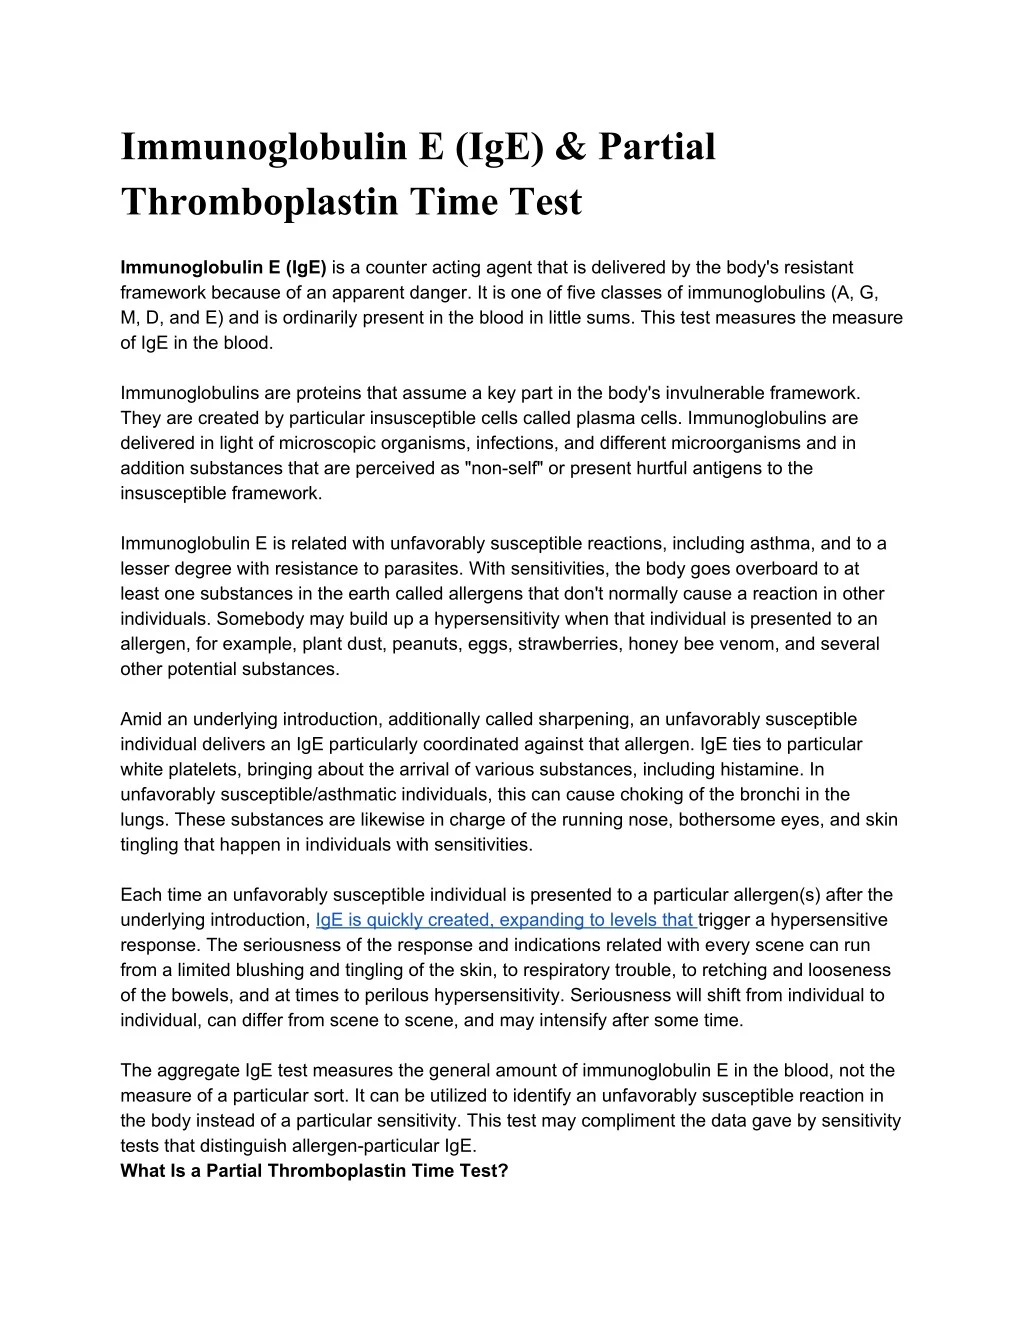 immunoglobulin e ige partial thromboplastin time